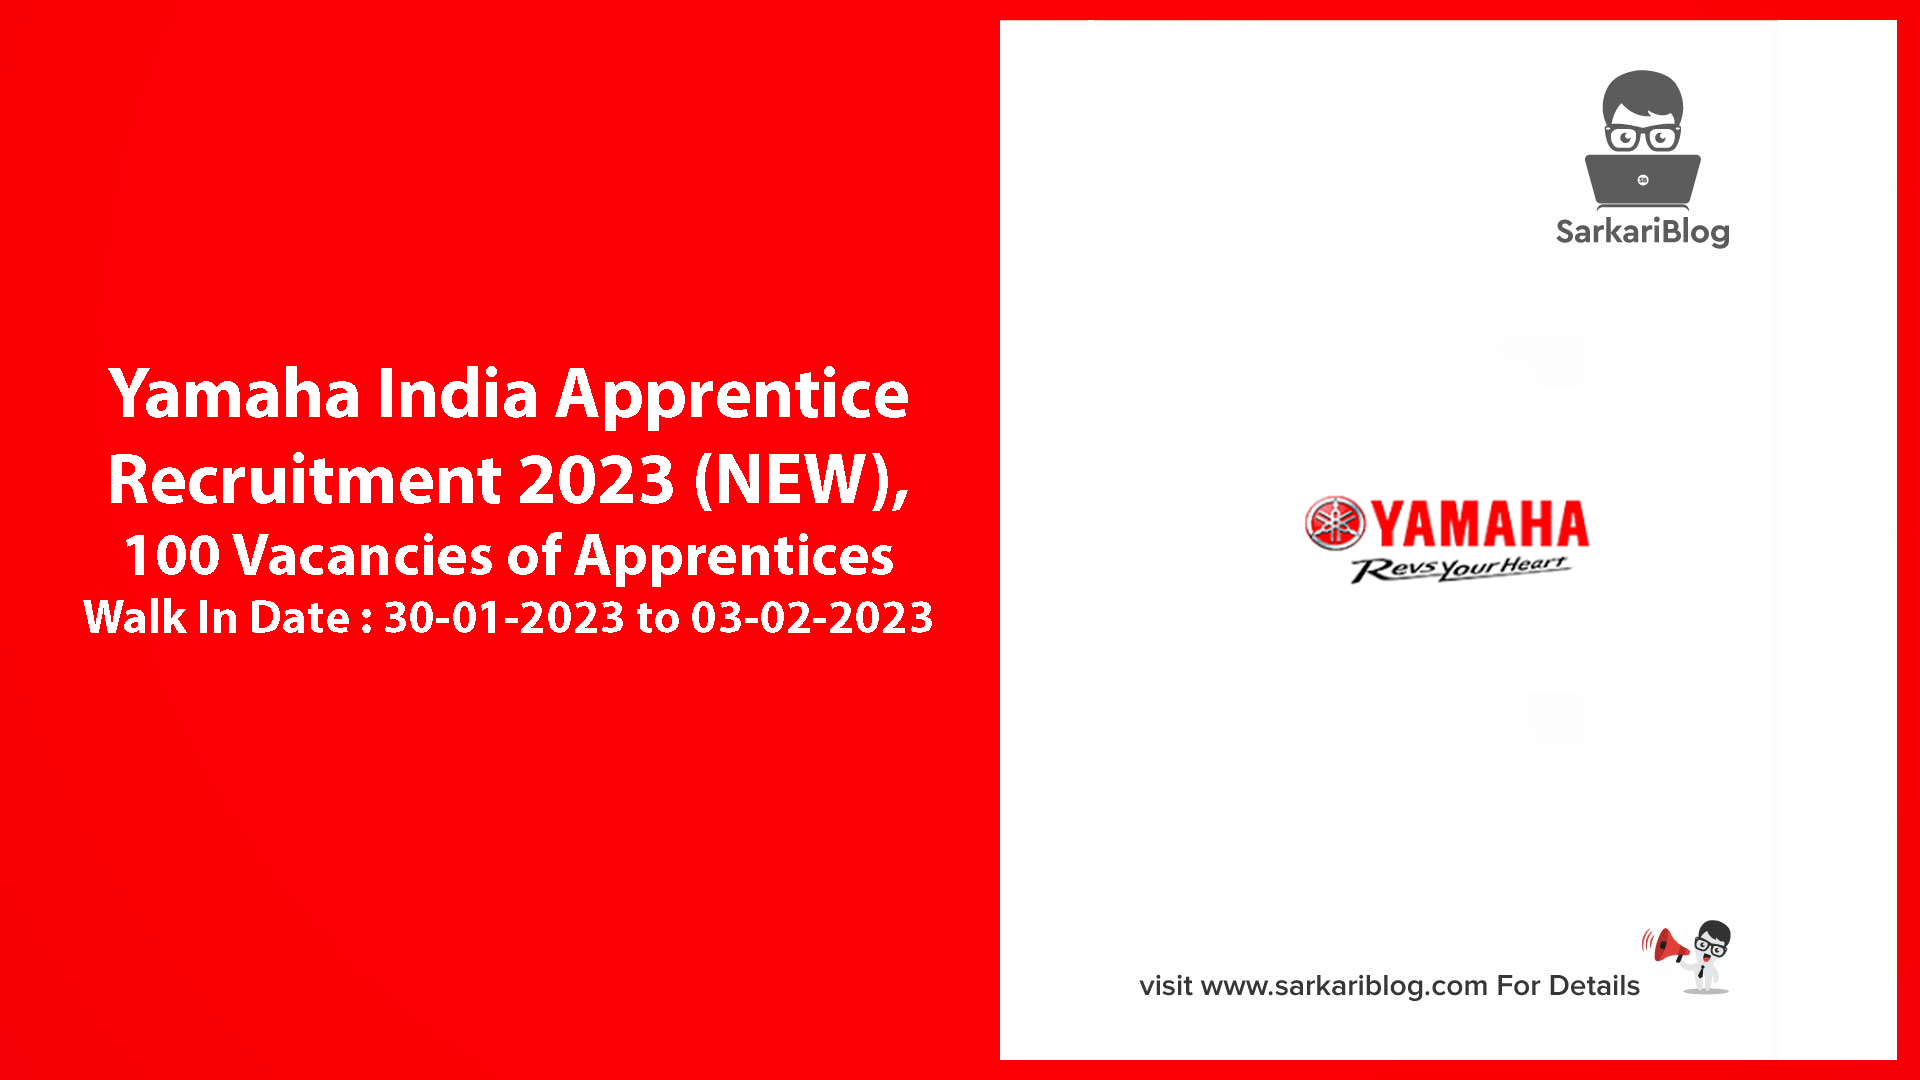 Yamaha India Apprentice Recruitment 2023 (NEW)